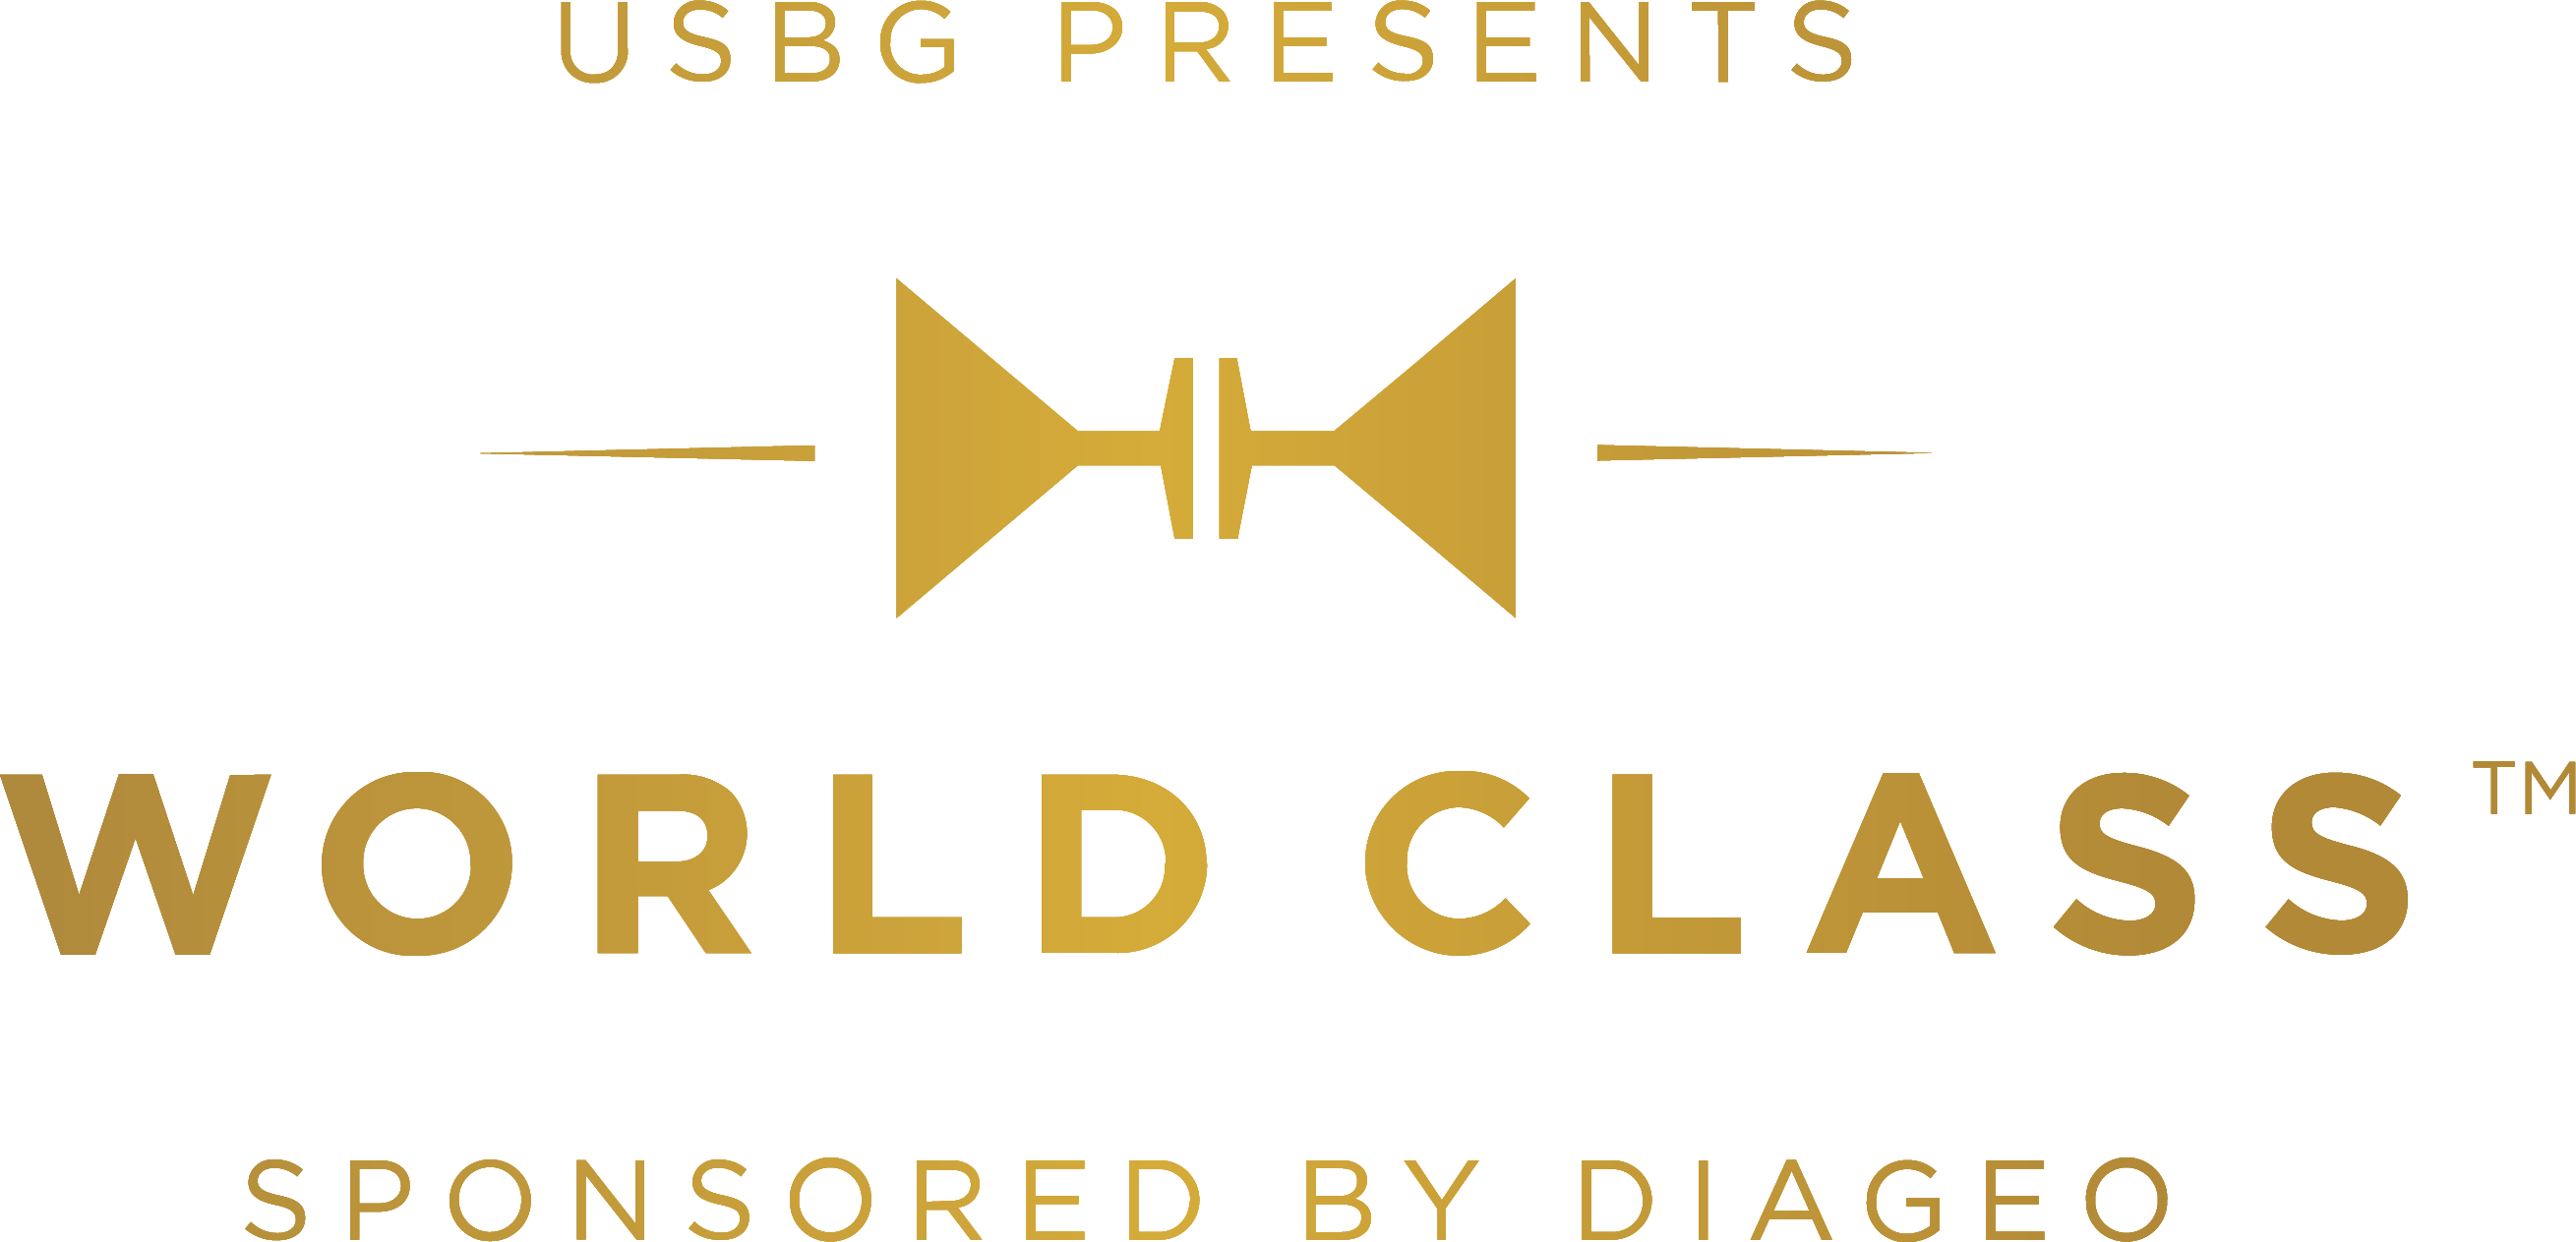 USBG Presents World Class Sponsored by Diageo